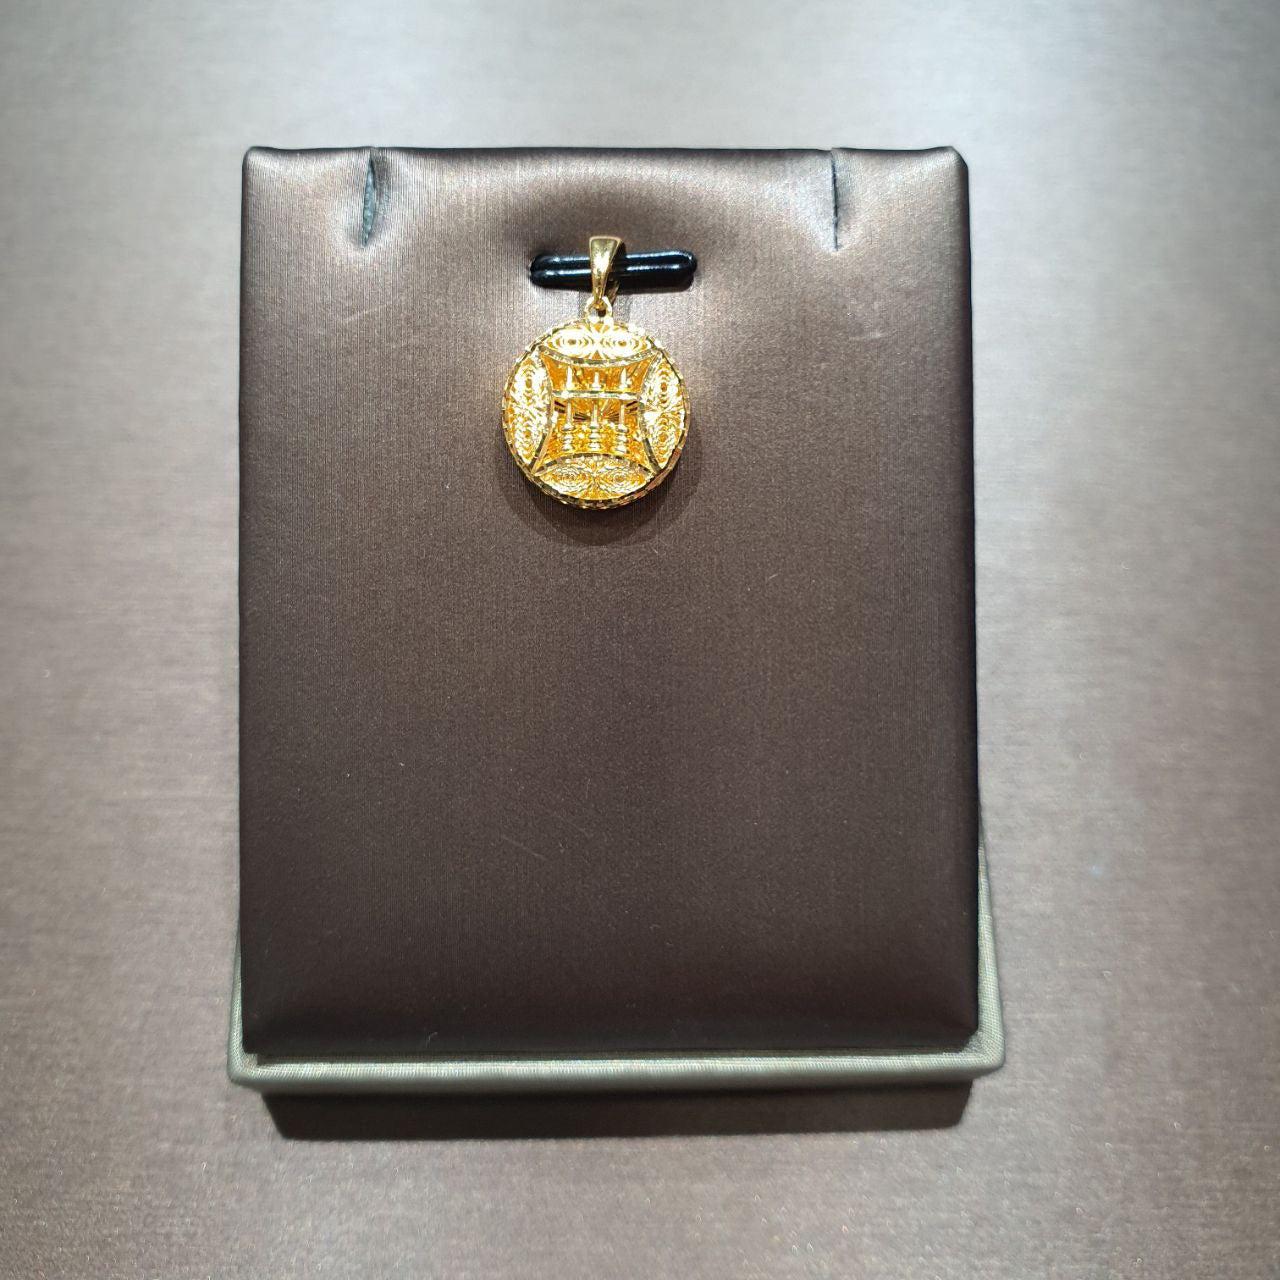 22k / 916 Gold Coin Abacus Pendant-Charms & Pendants-Best Gold Shop